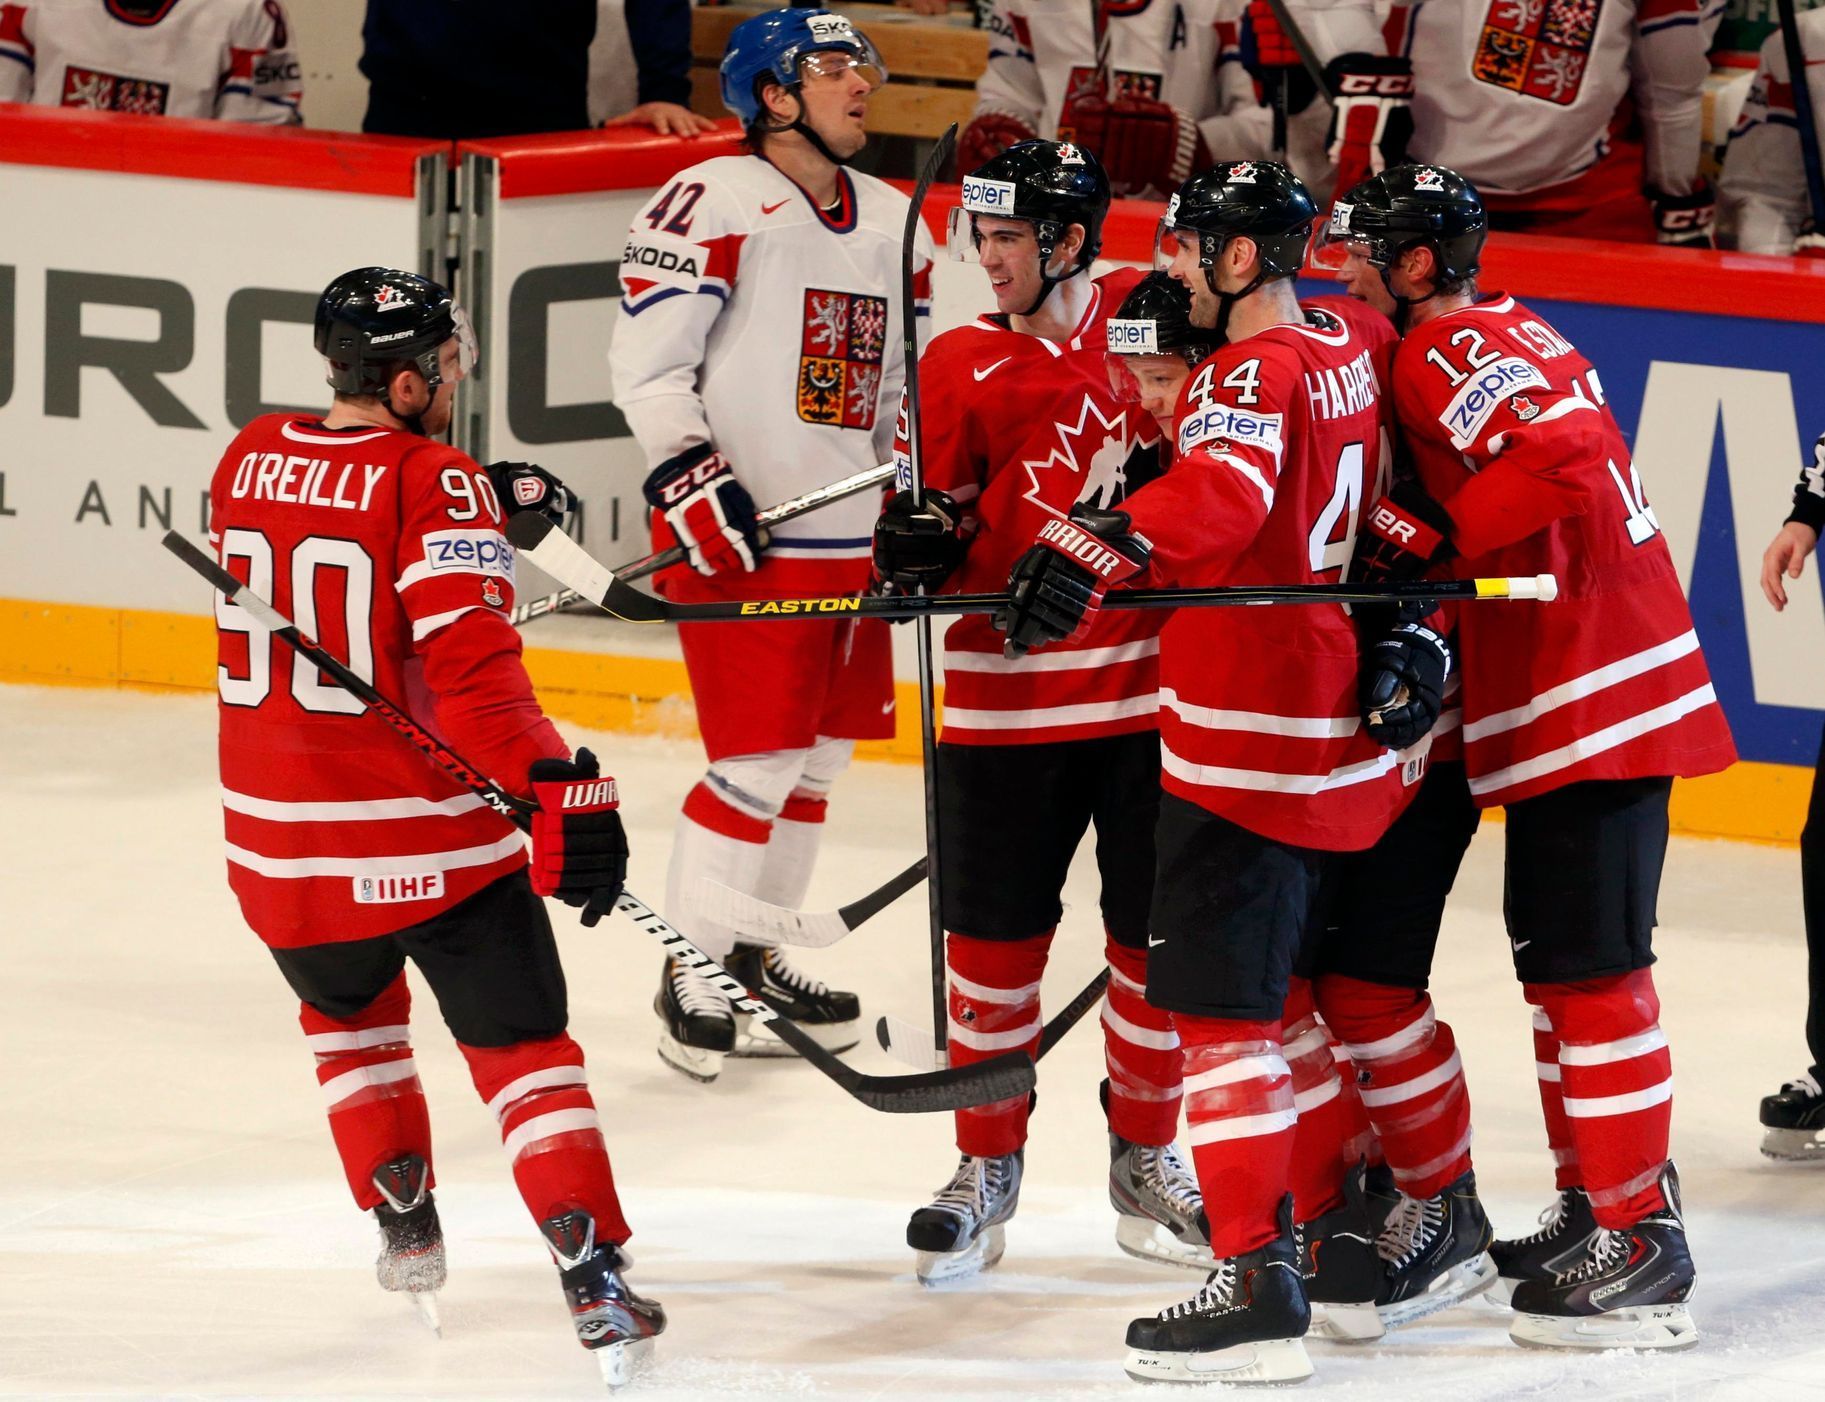 Hokej, MS 2013, Česko - Kanada: Kanada slaví gól na 1:2; vzadu Petr Koukal